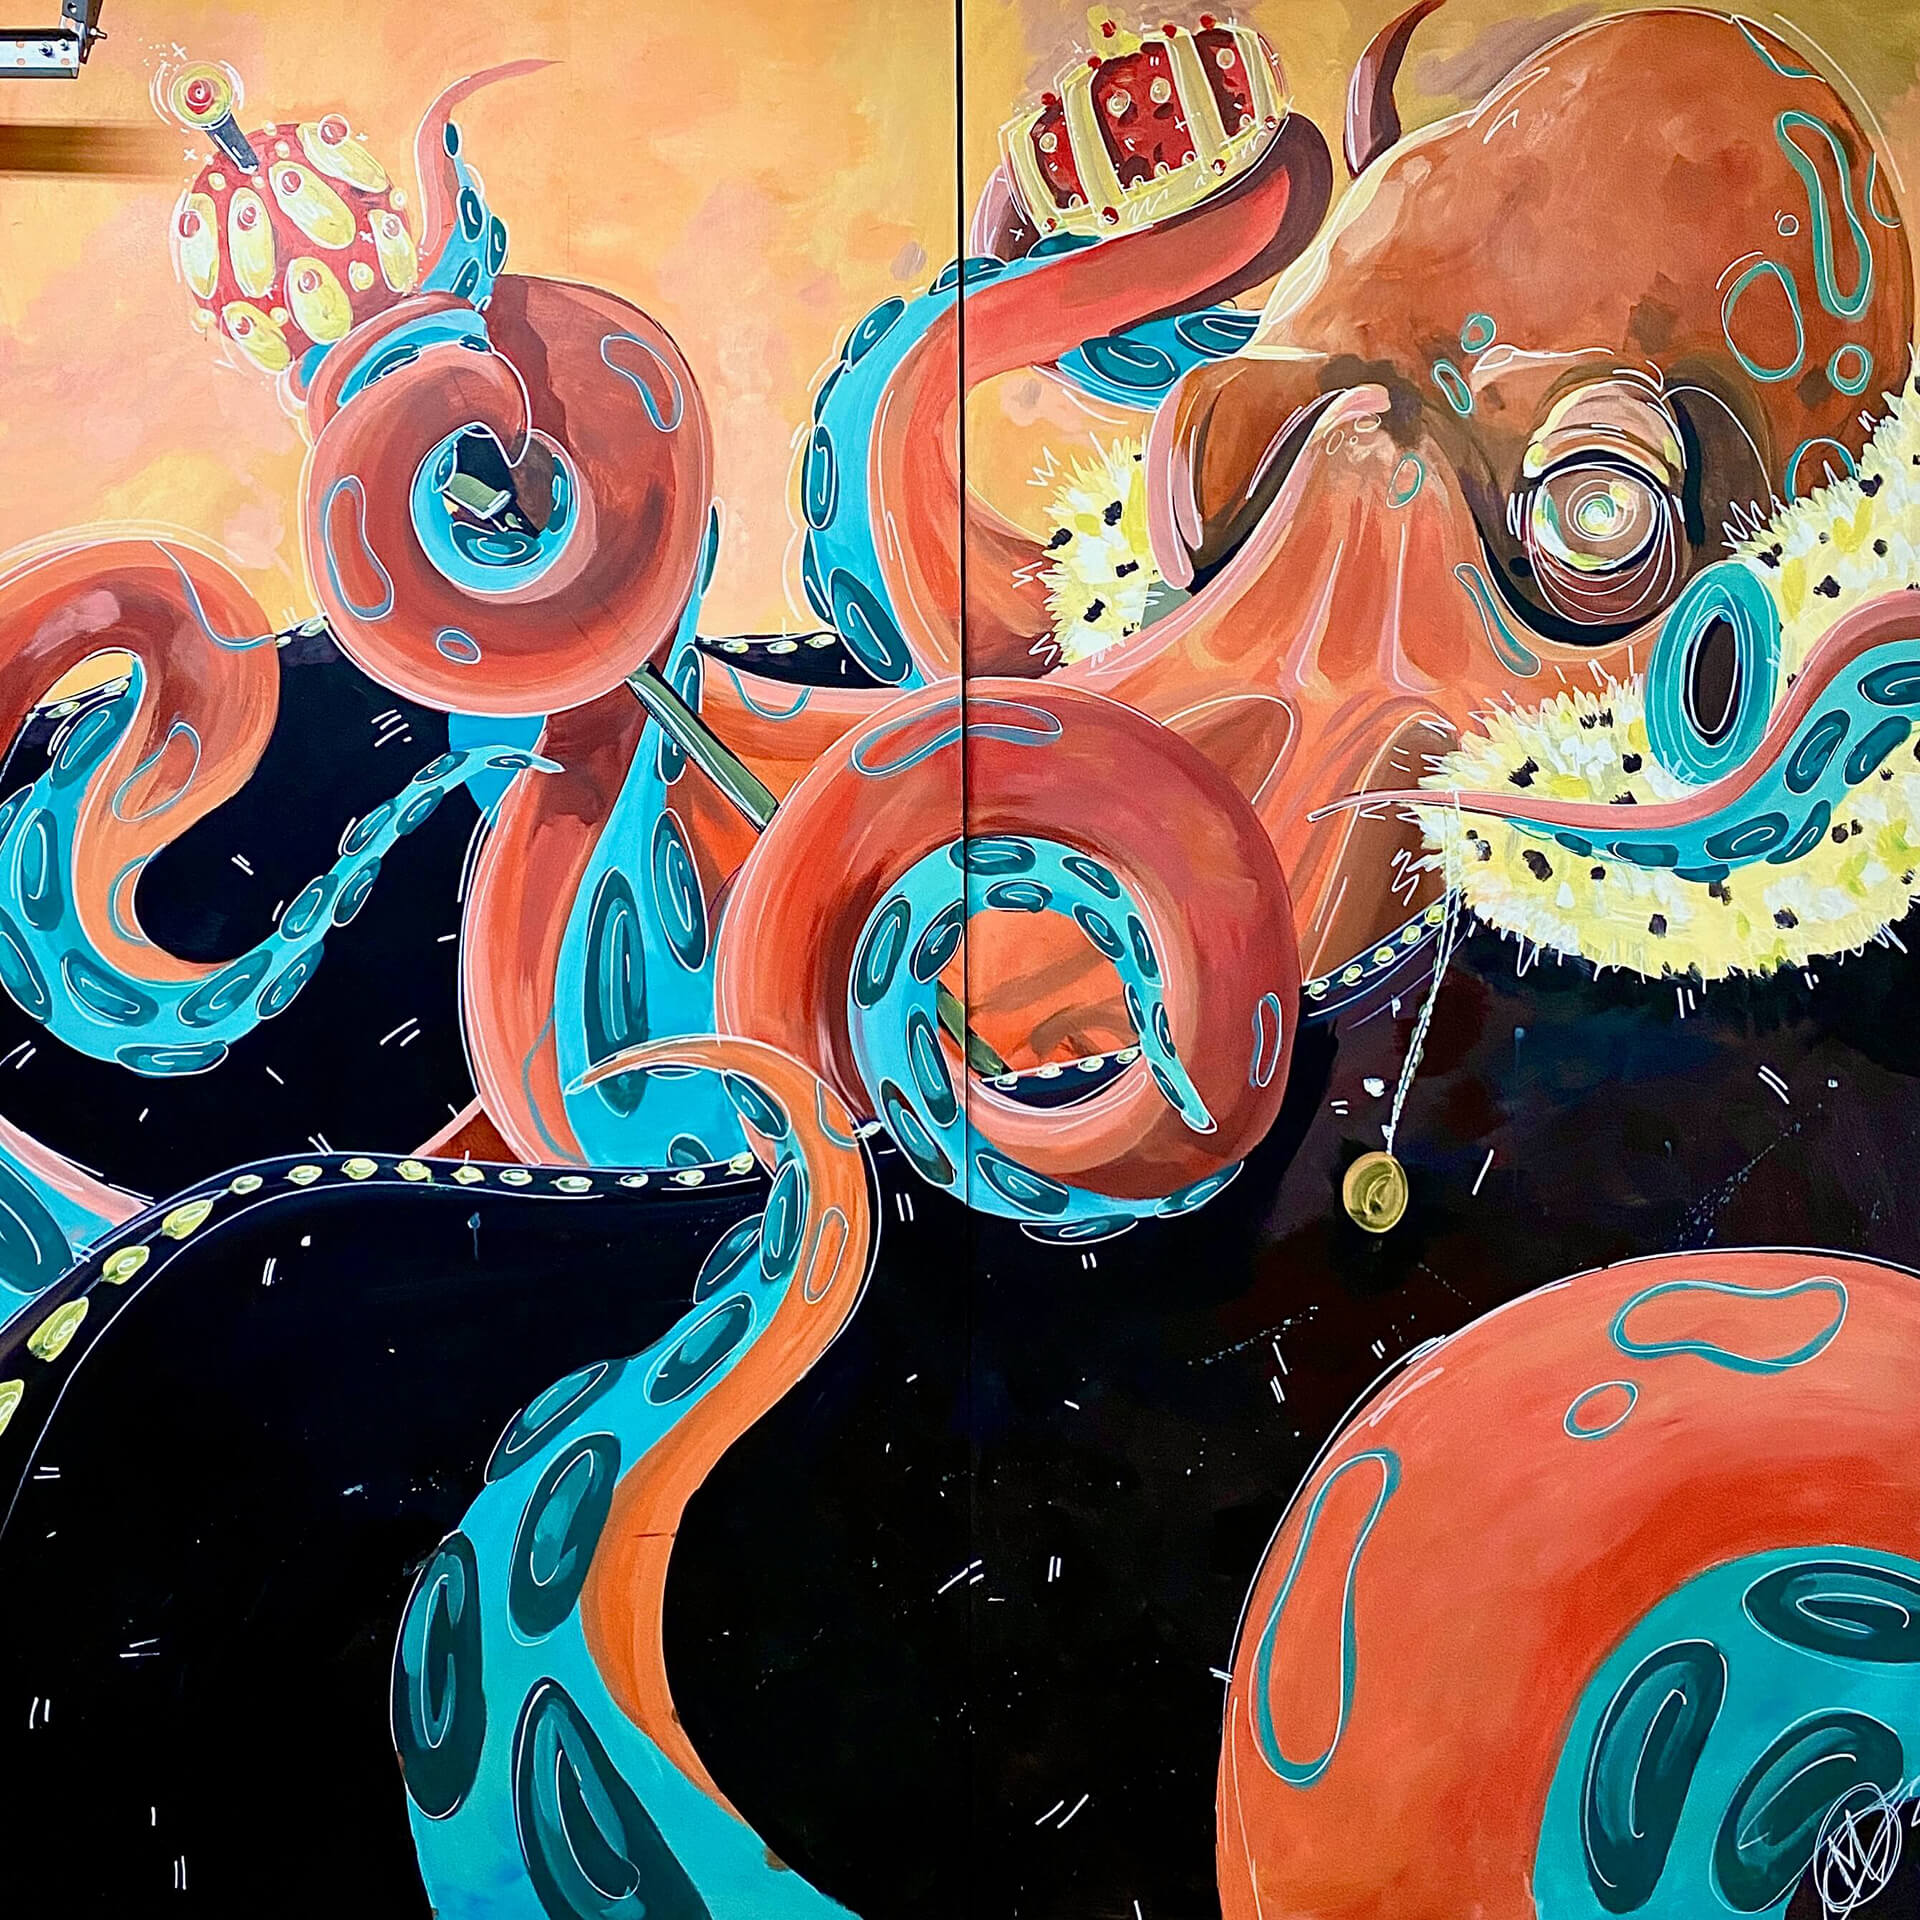 "King Octopus" by Maya Sorvalo